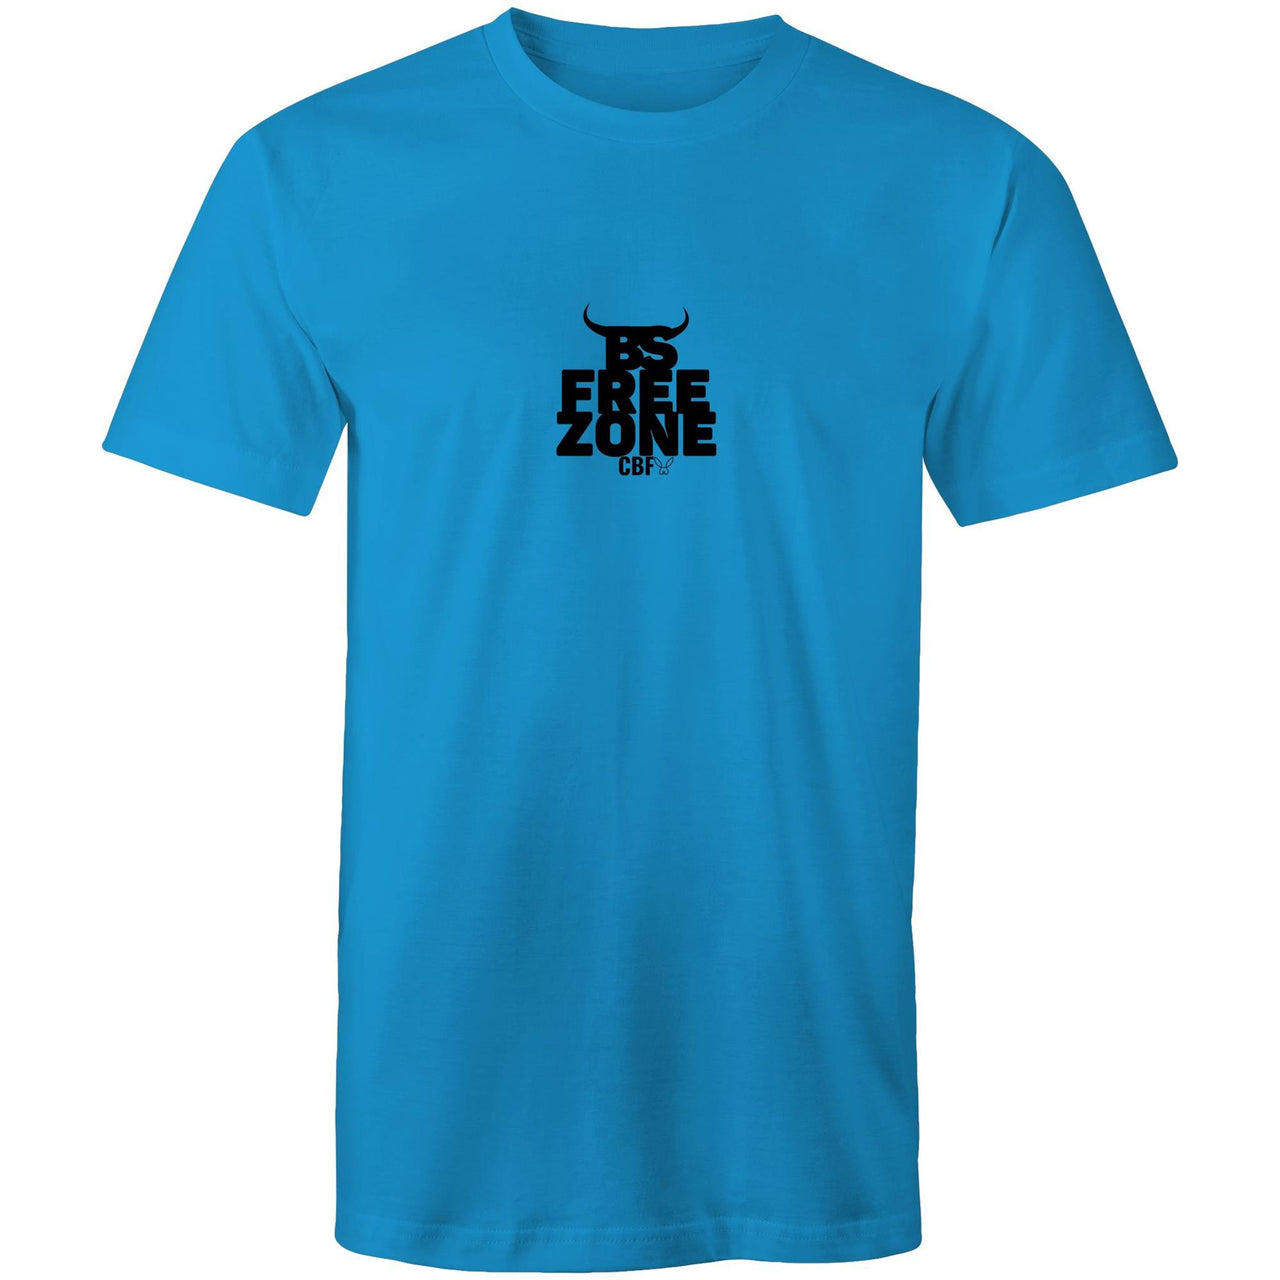 BS Free Zone Crew T-Shirt